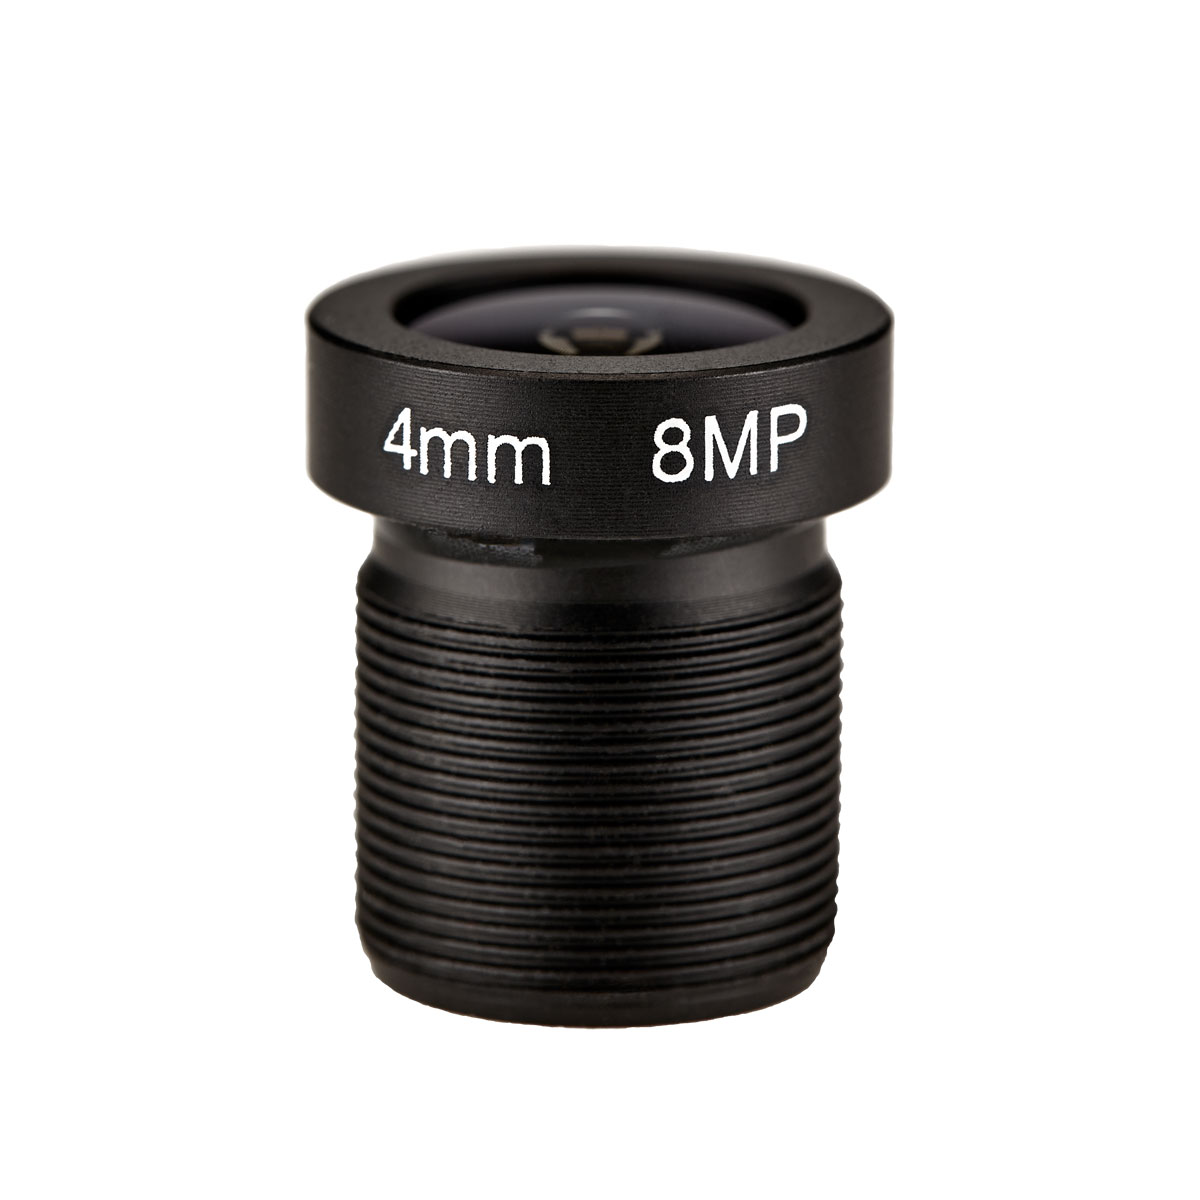 M12 Lens CV-4804-8MP